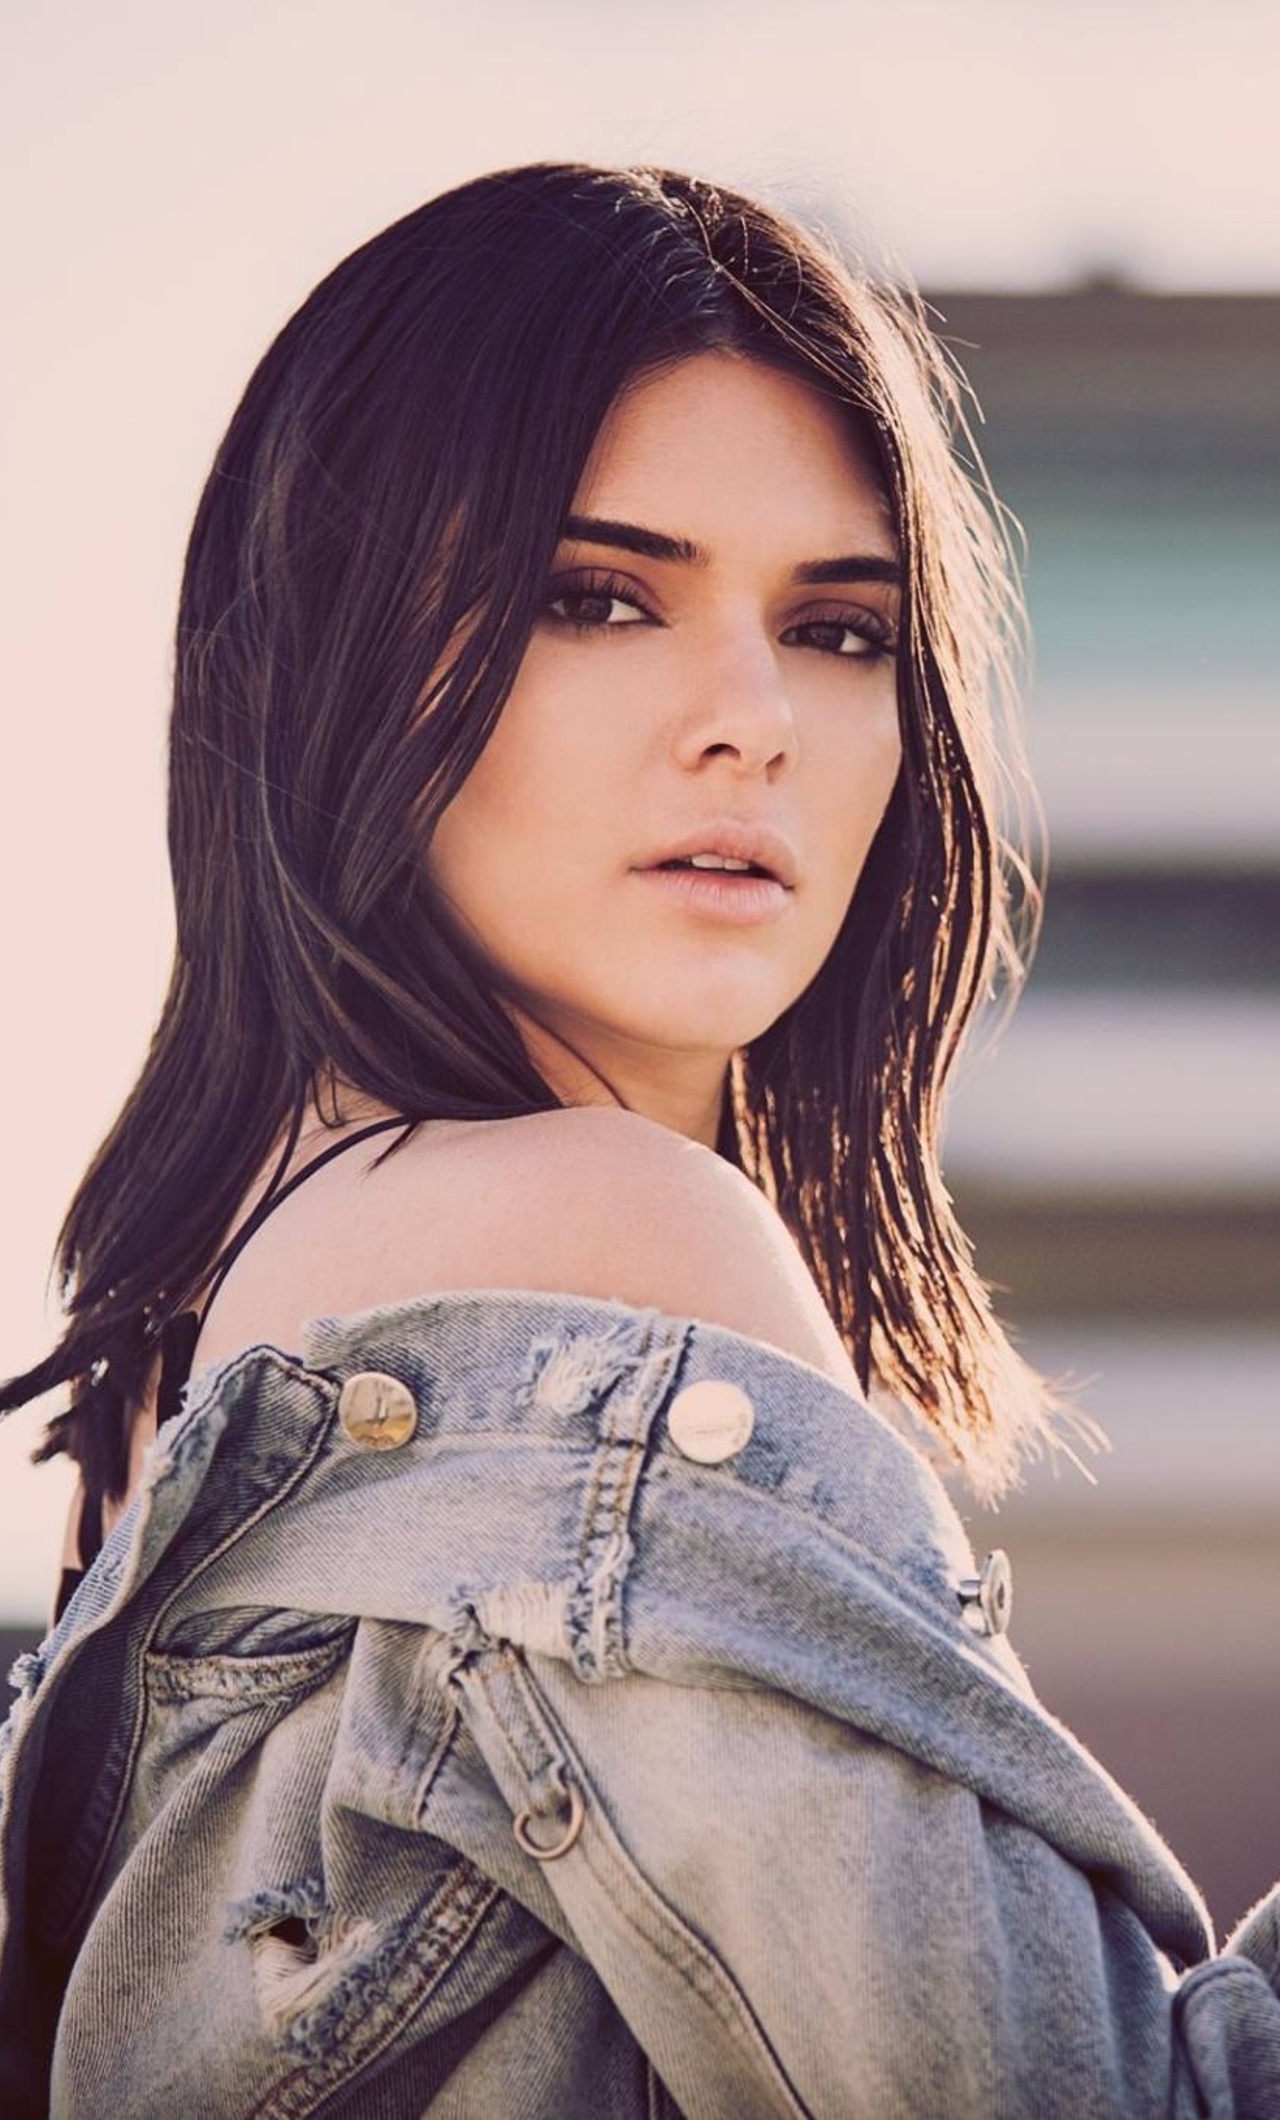 Kendall Jenner Portrait Wallpapers